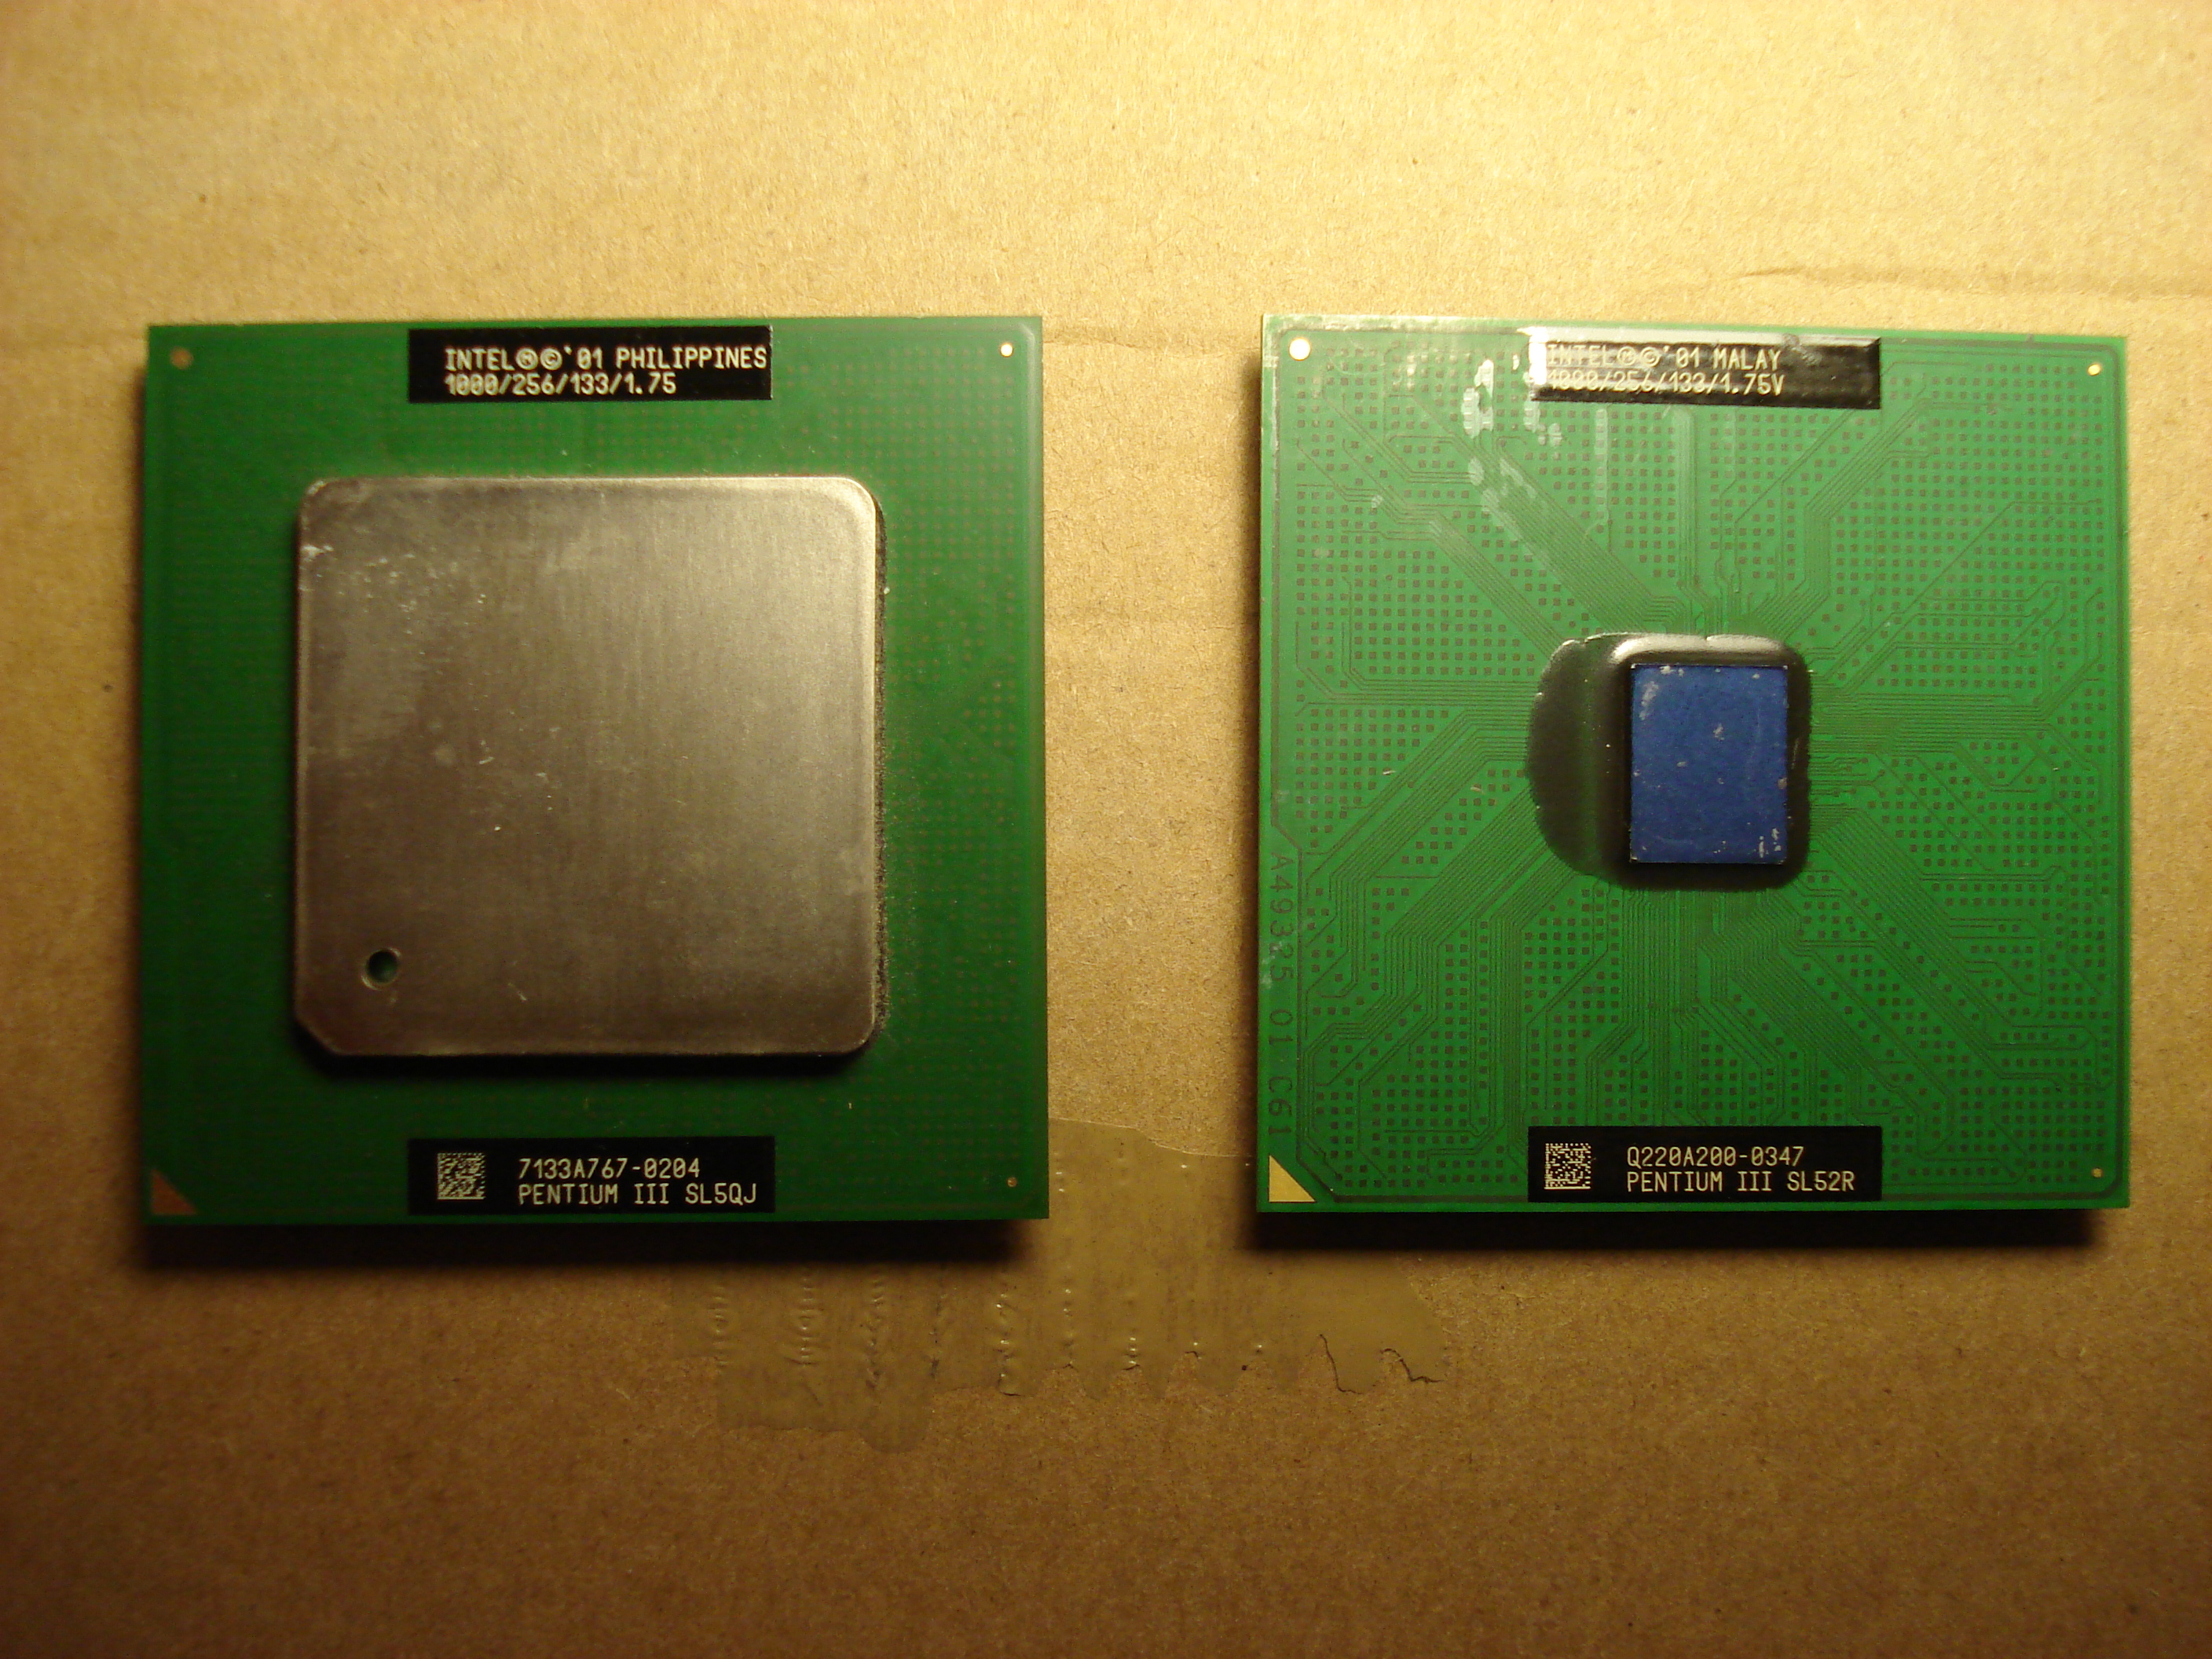 Intel 3 pro. Интел пентиум 3. Пентиум 3 характеристики. Intel Pentium 3 ПК. Пентиум 360.